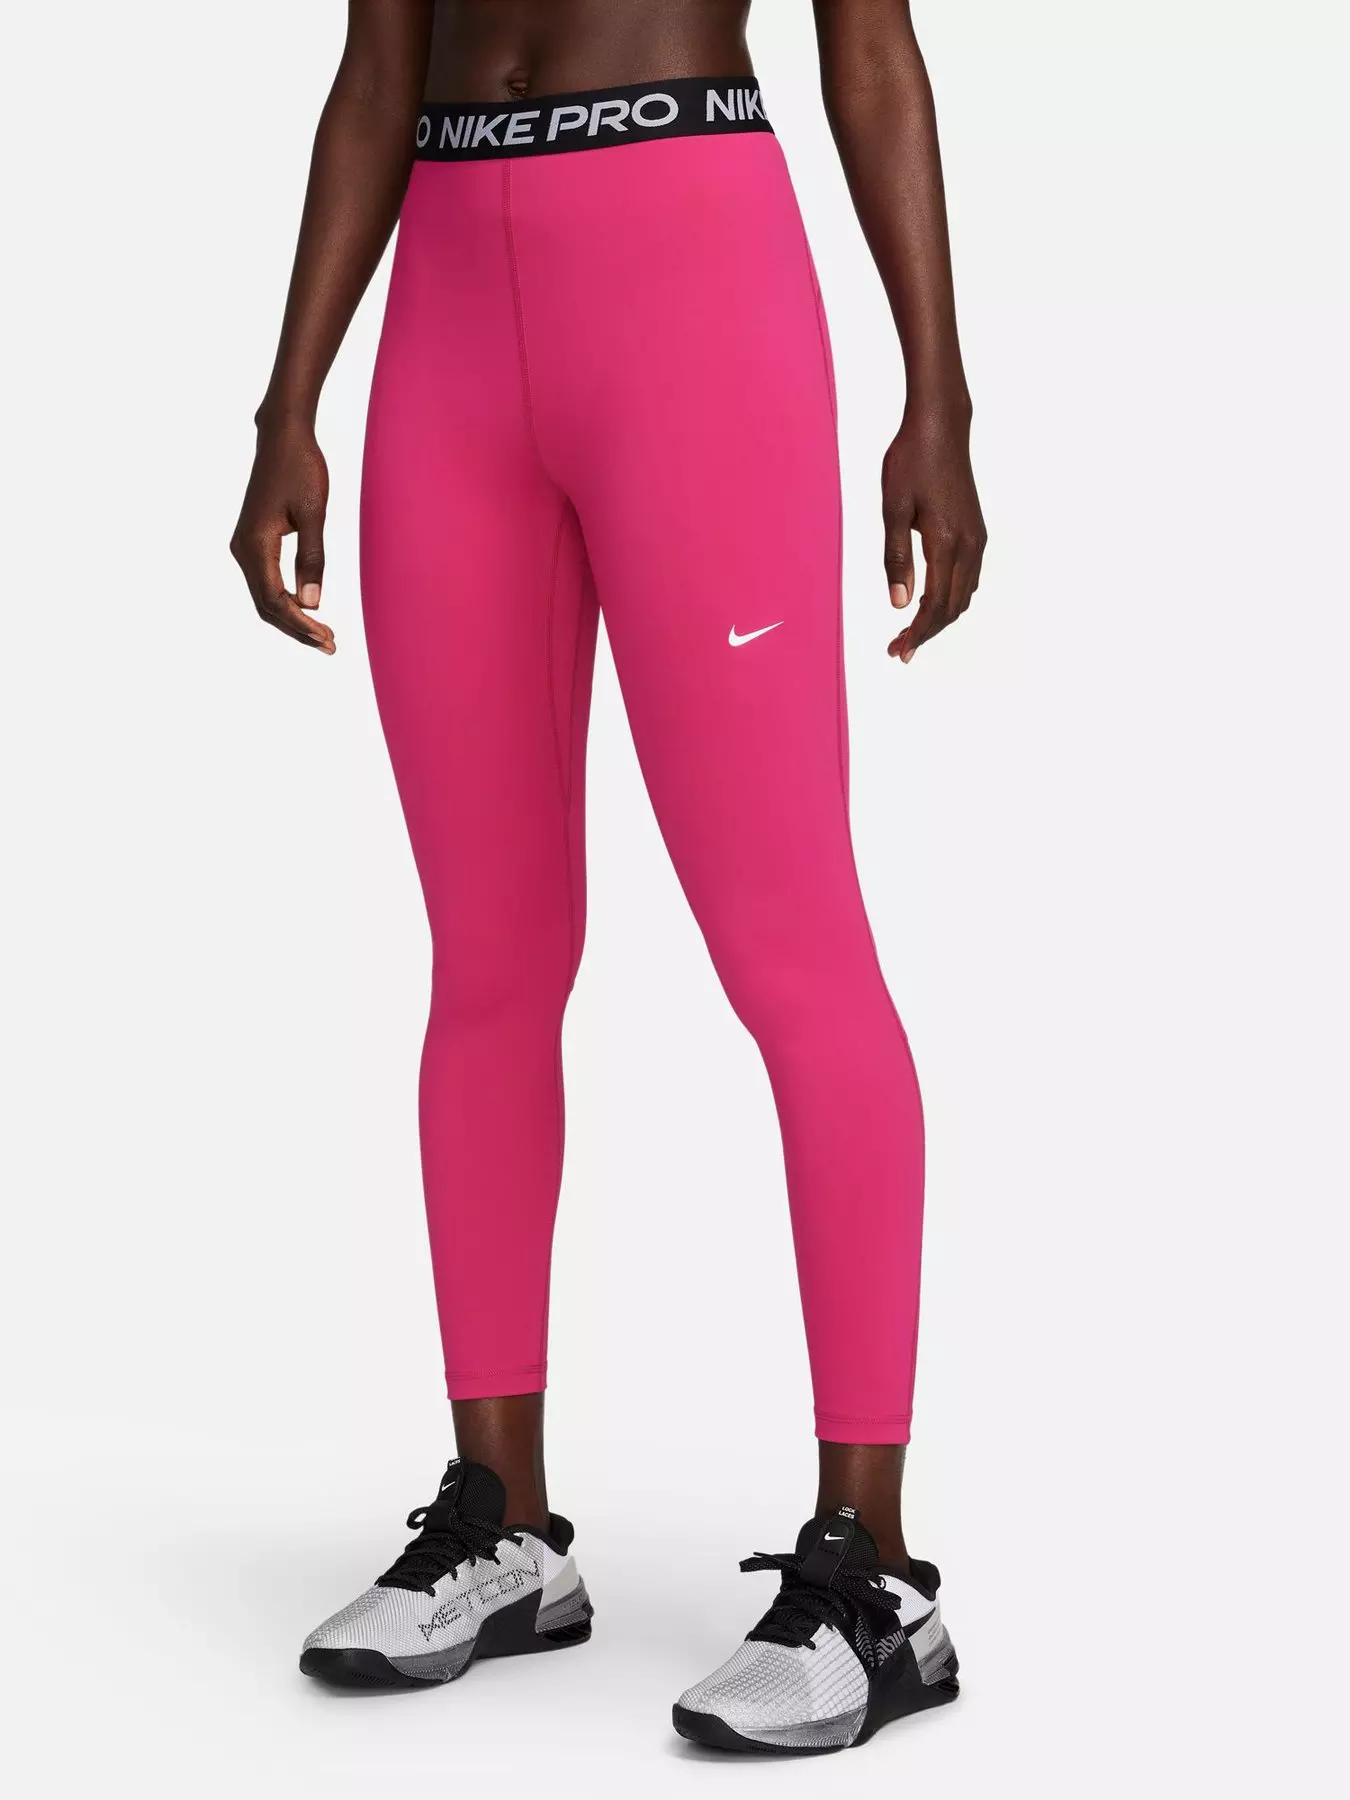  Nike Women's Victory Training Capris, Dri-FIT Leggings